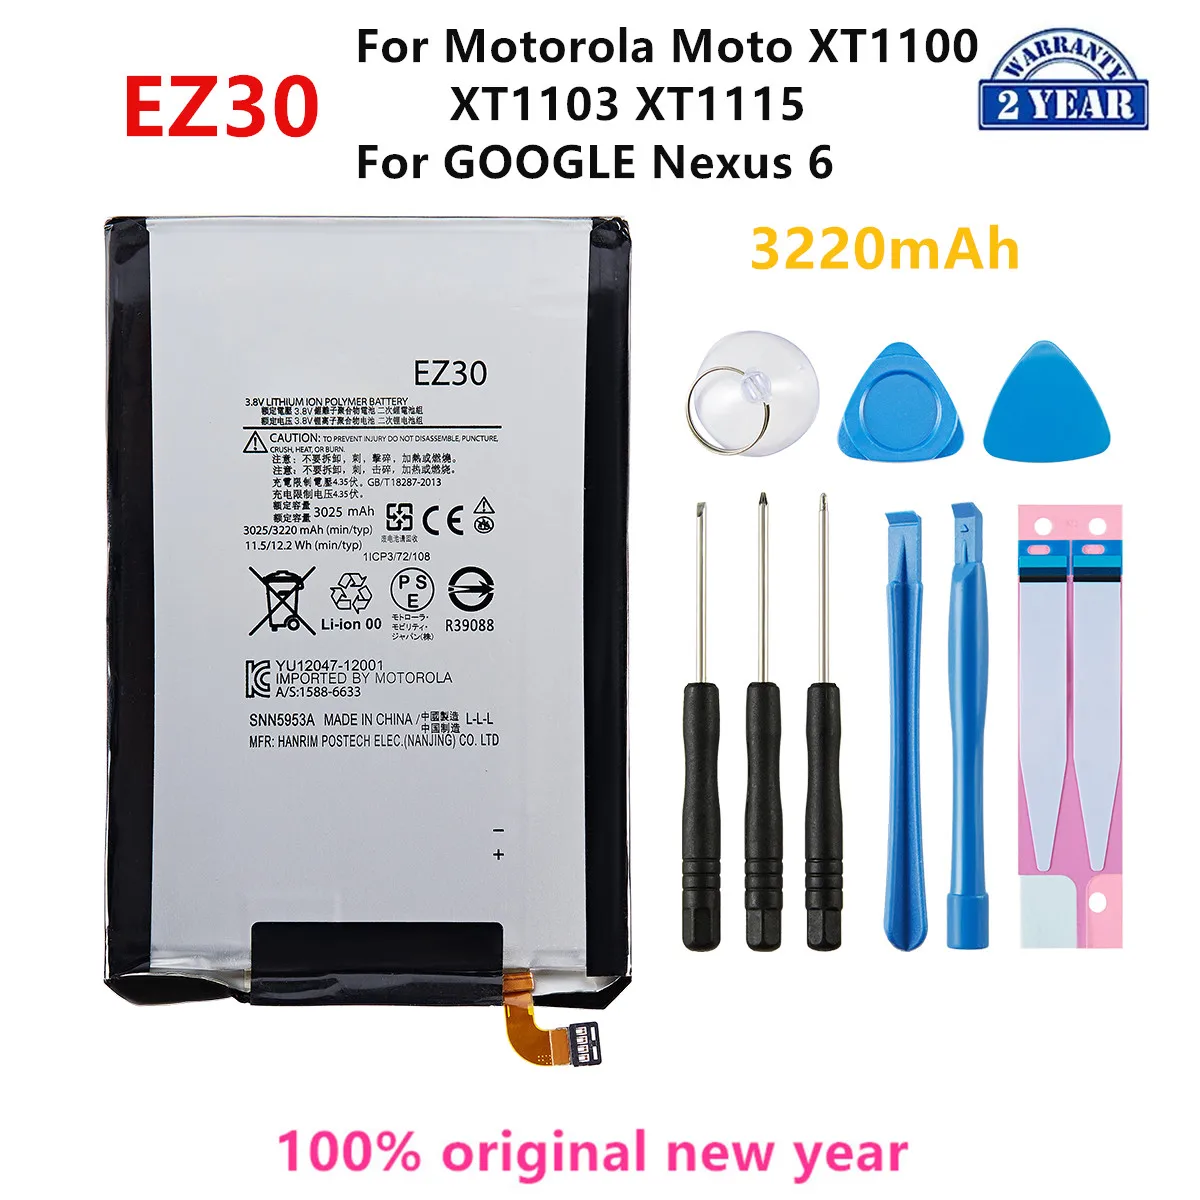 

100% Original EZ30 3220mAh Battery For Motorola Moto XT1100 XT1103 XT1115/GOOGLE Nexus 6 Mobile phone Batteries+Tools